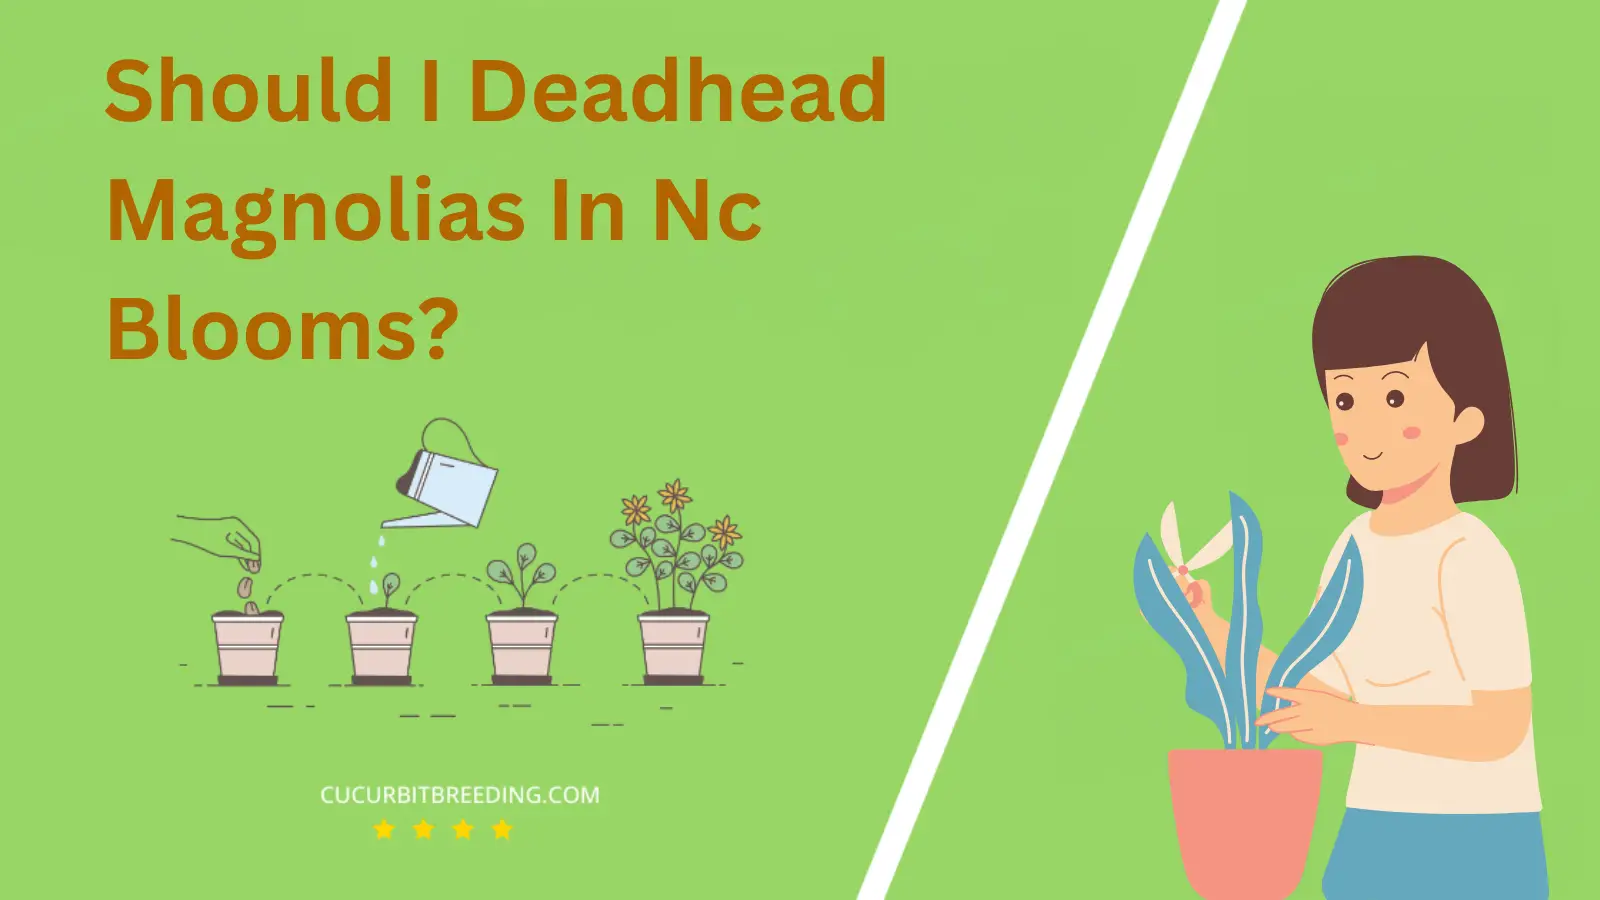 Should I Deadhead Magnolias In Nc Blooms?